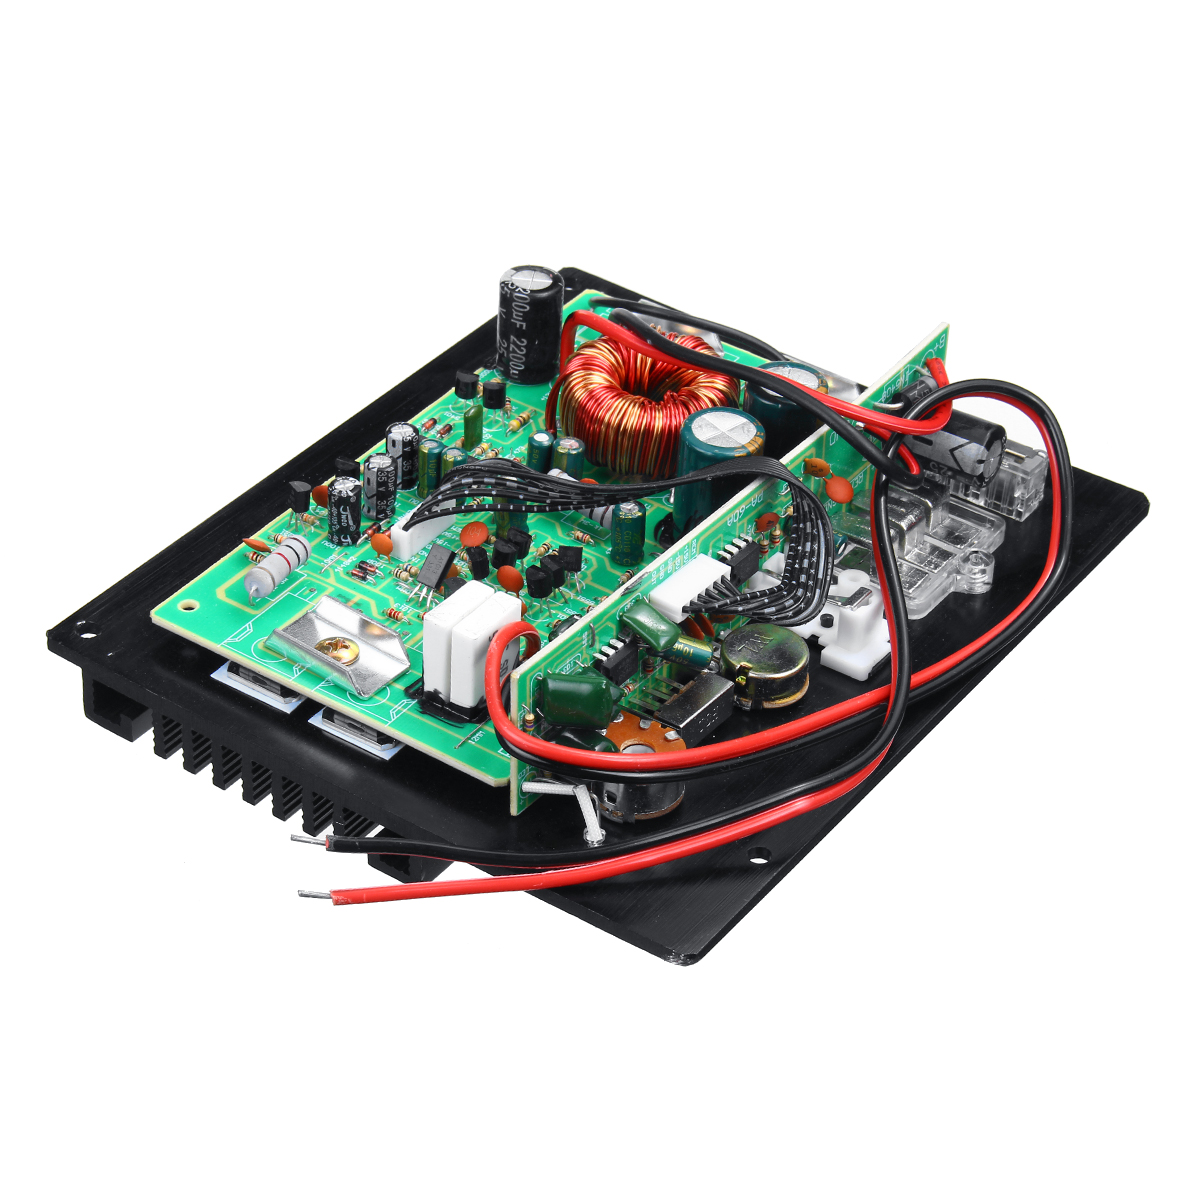 12V 600W 3D Crystal Power Input Car Audio Subwoofer Amplifier Board Player